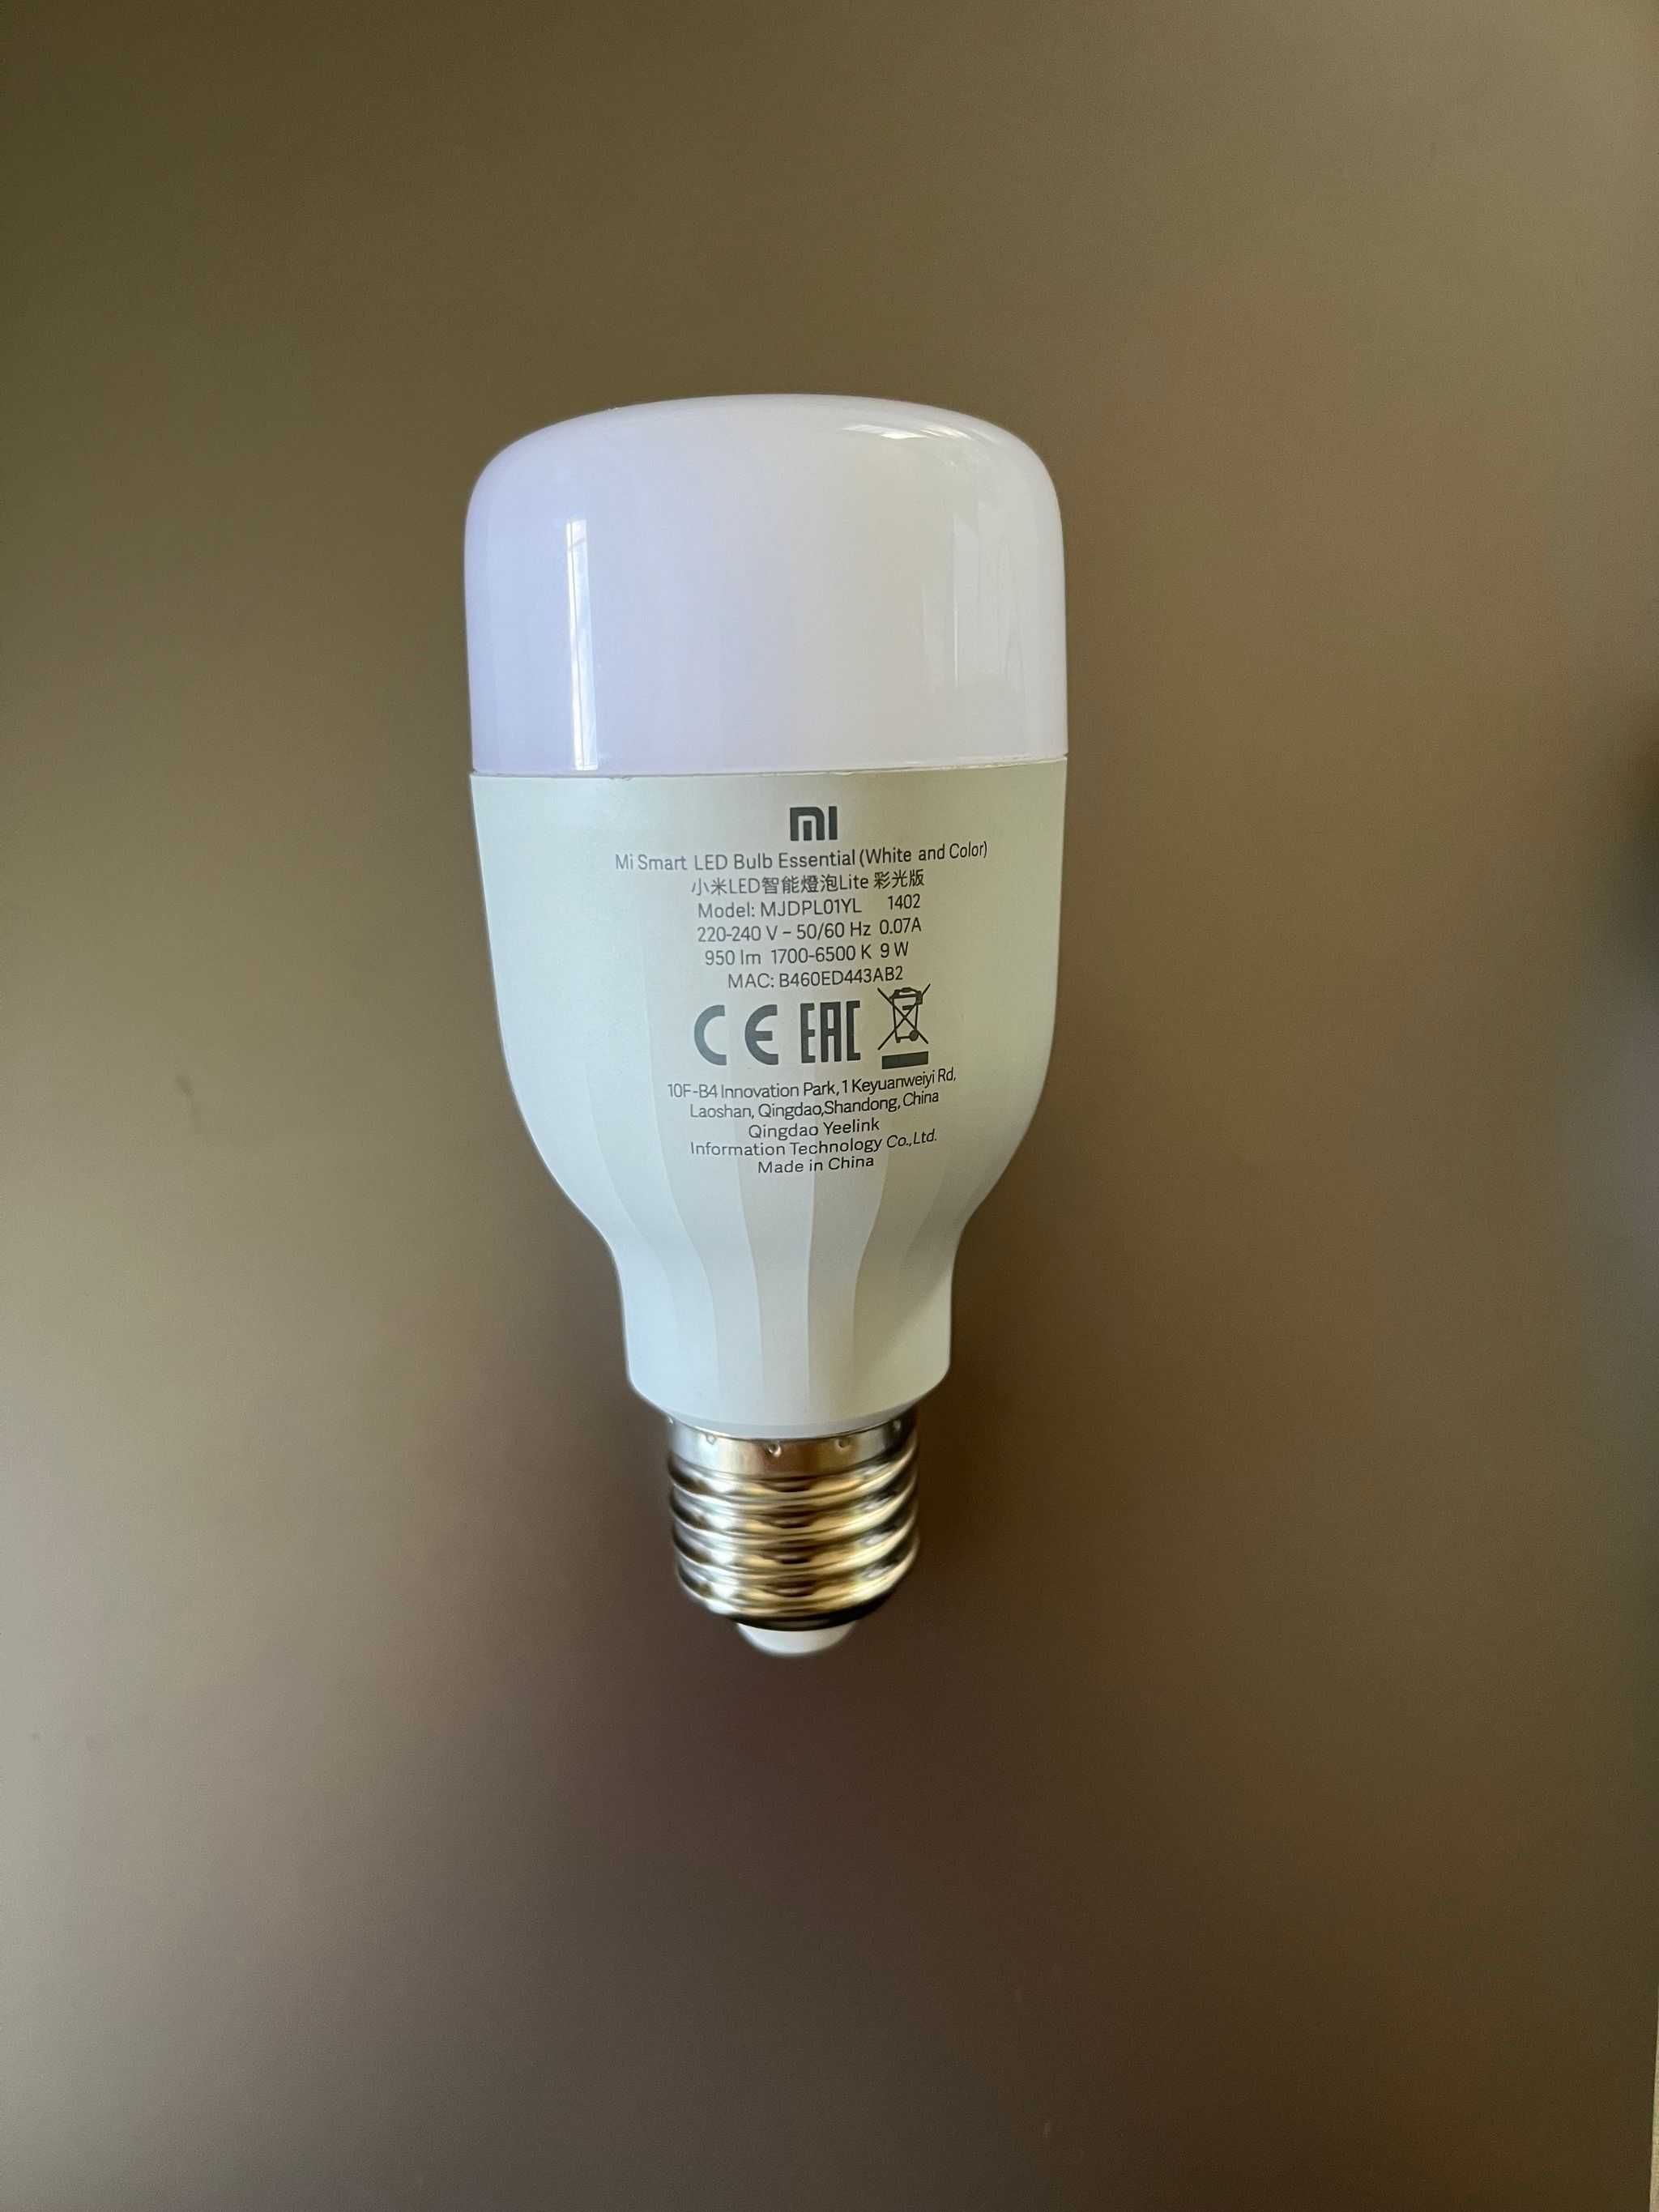 Mi Smart LED bulb essential (White and color) versão Global.